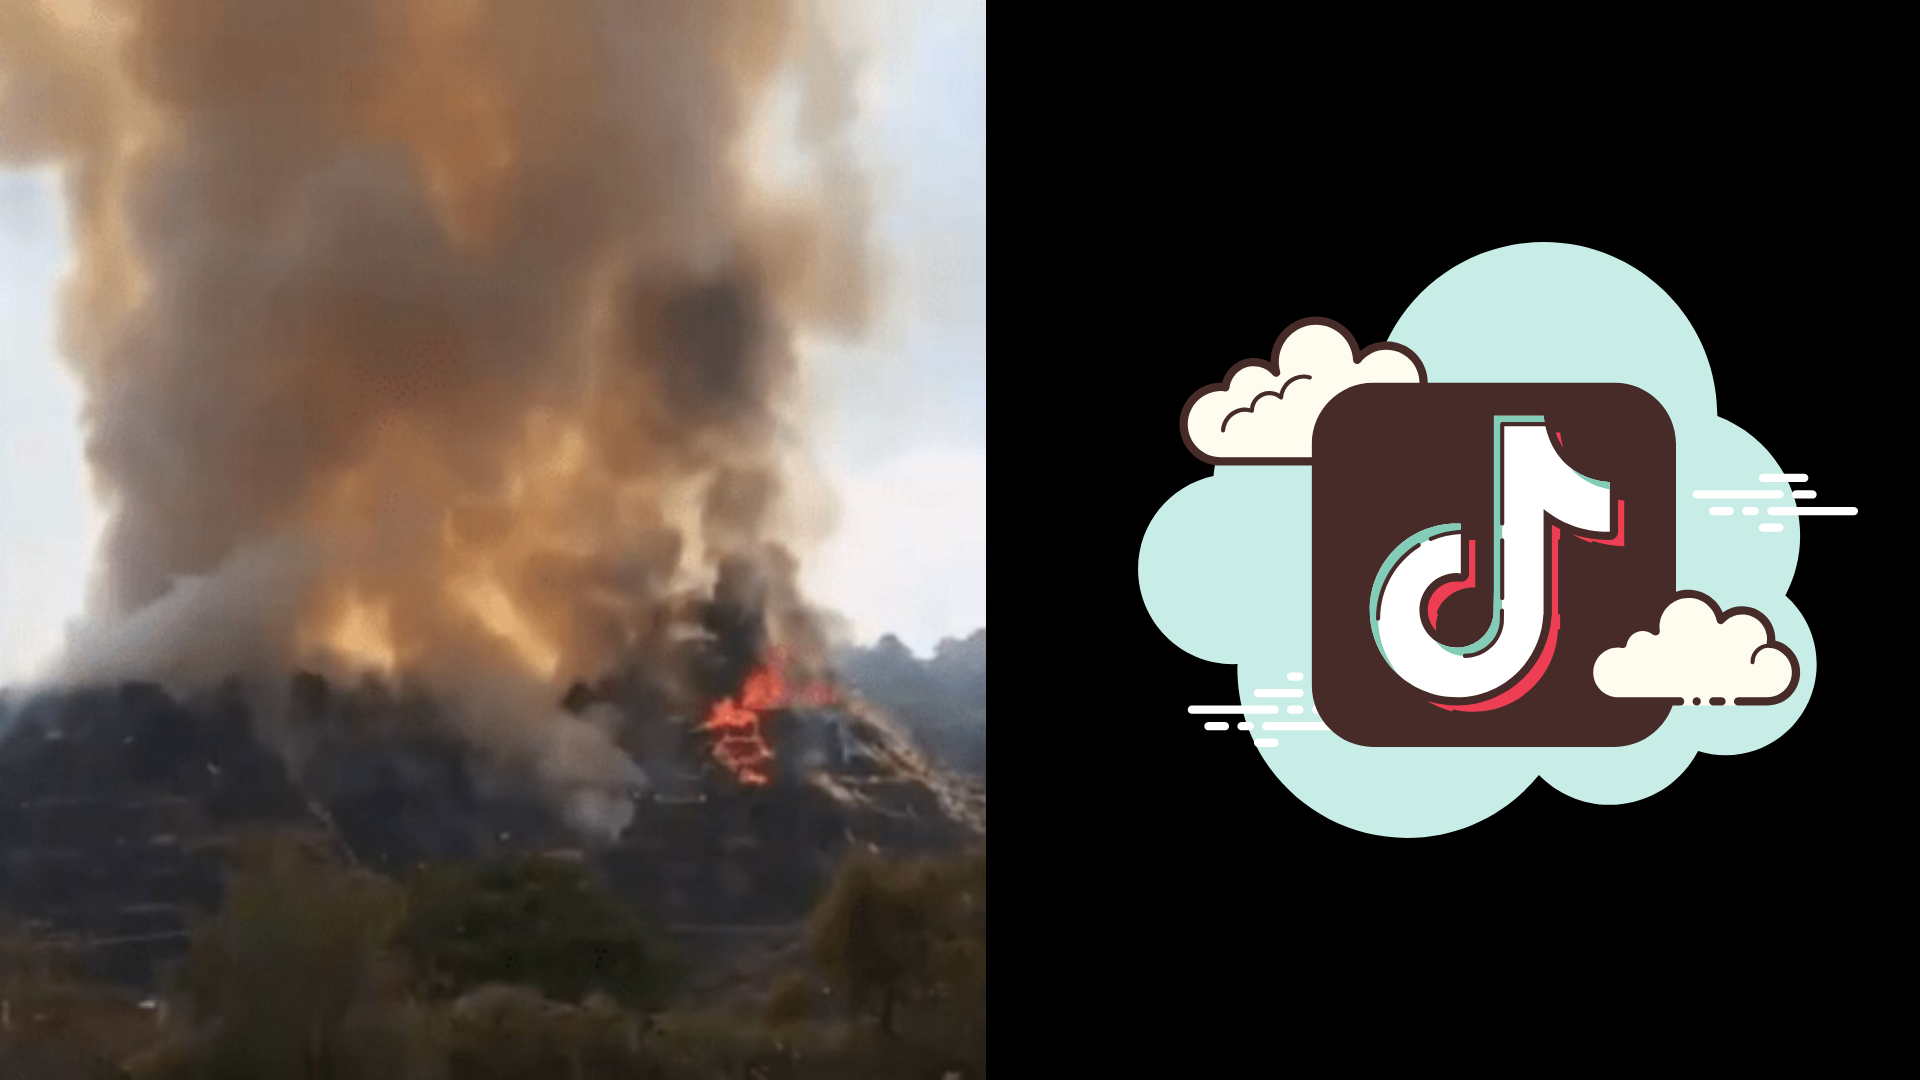 Chava causa incendio al grabar un TikTok haciendo malabares